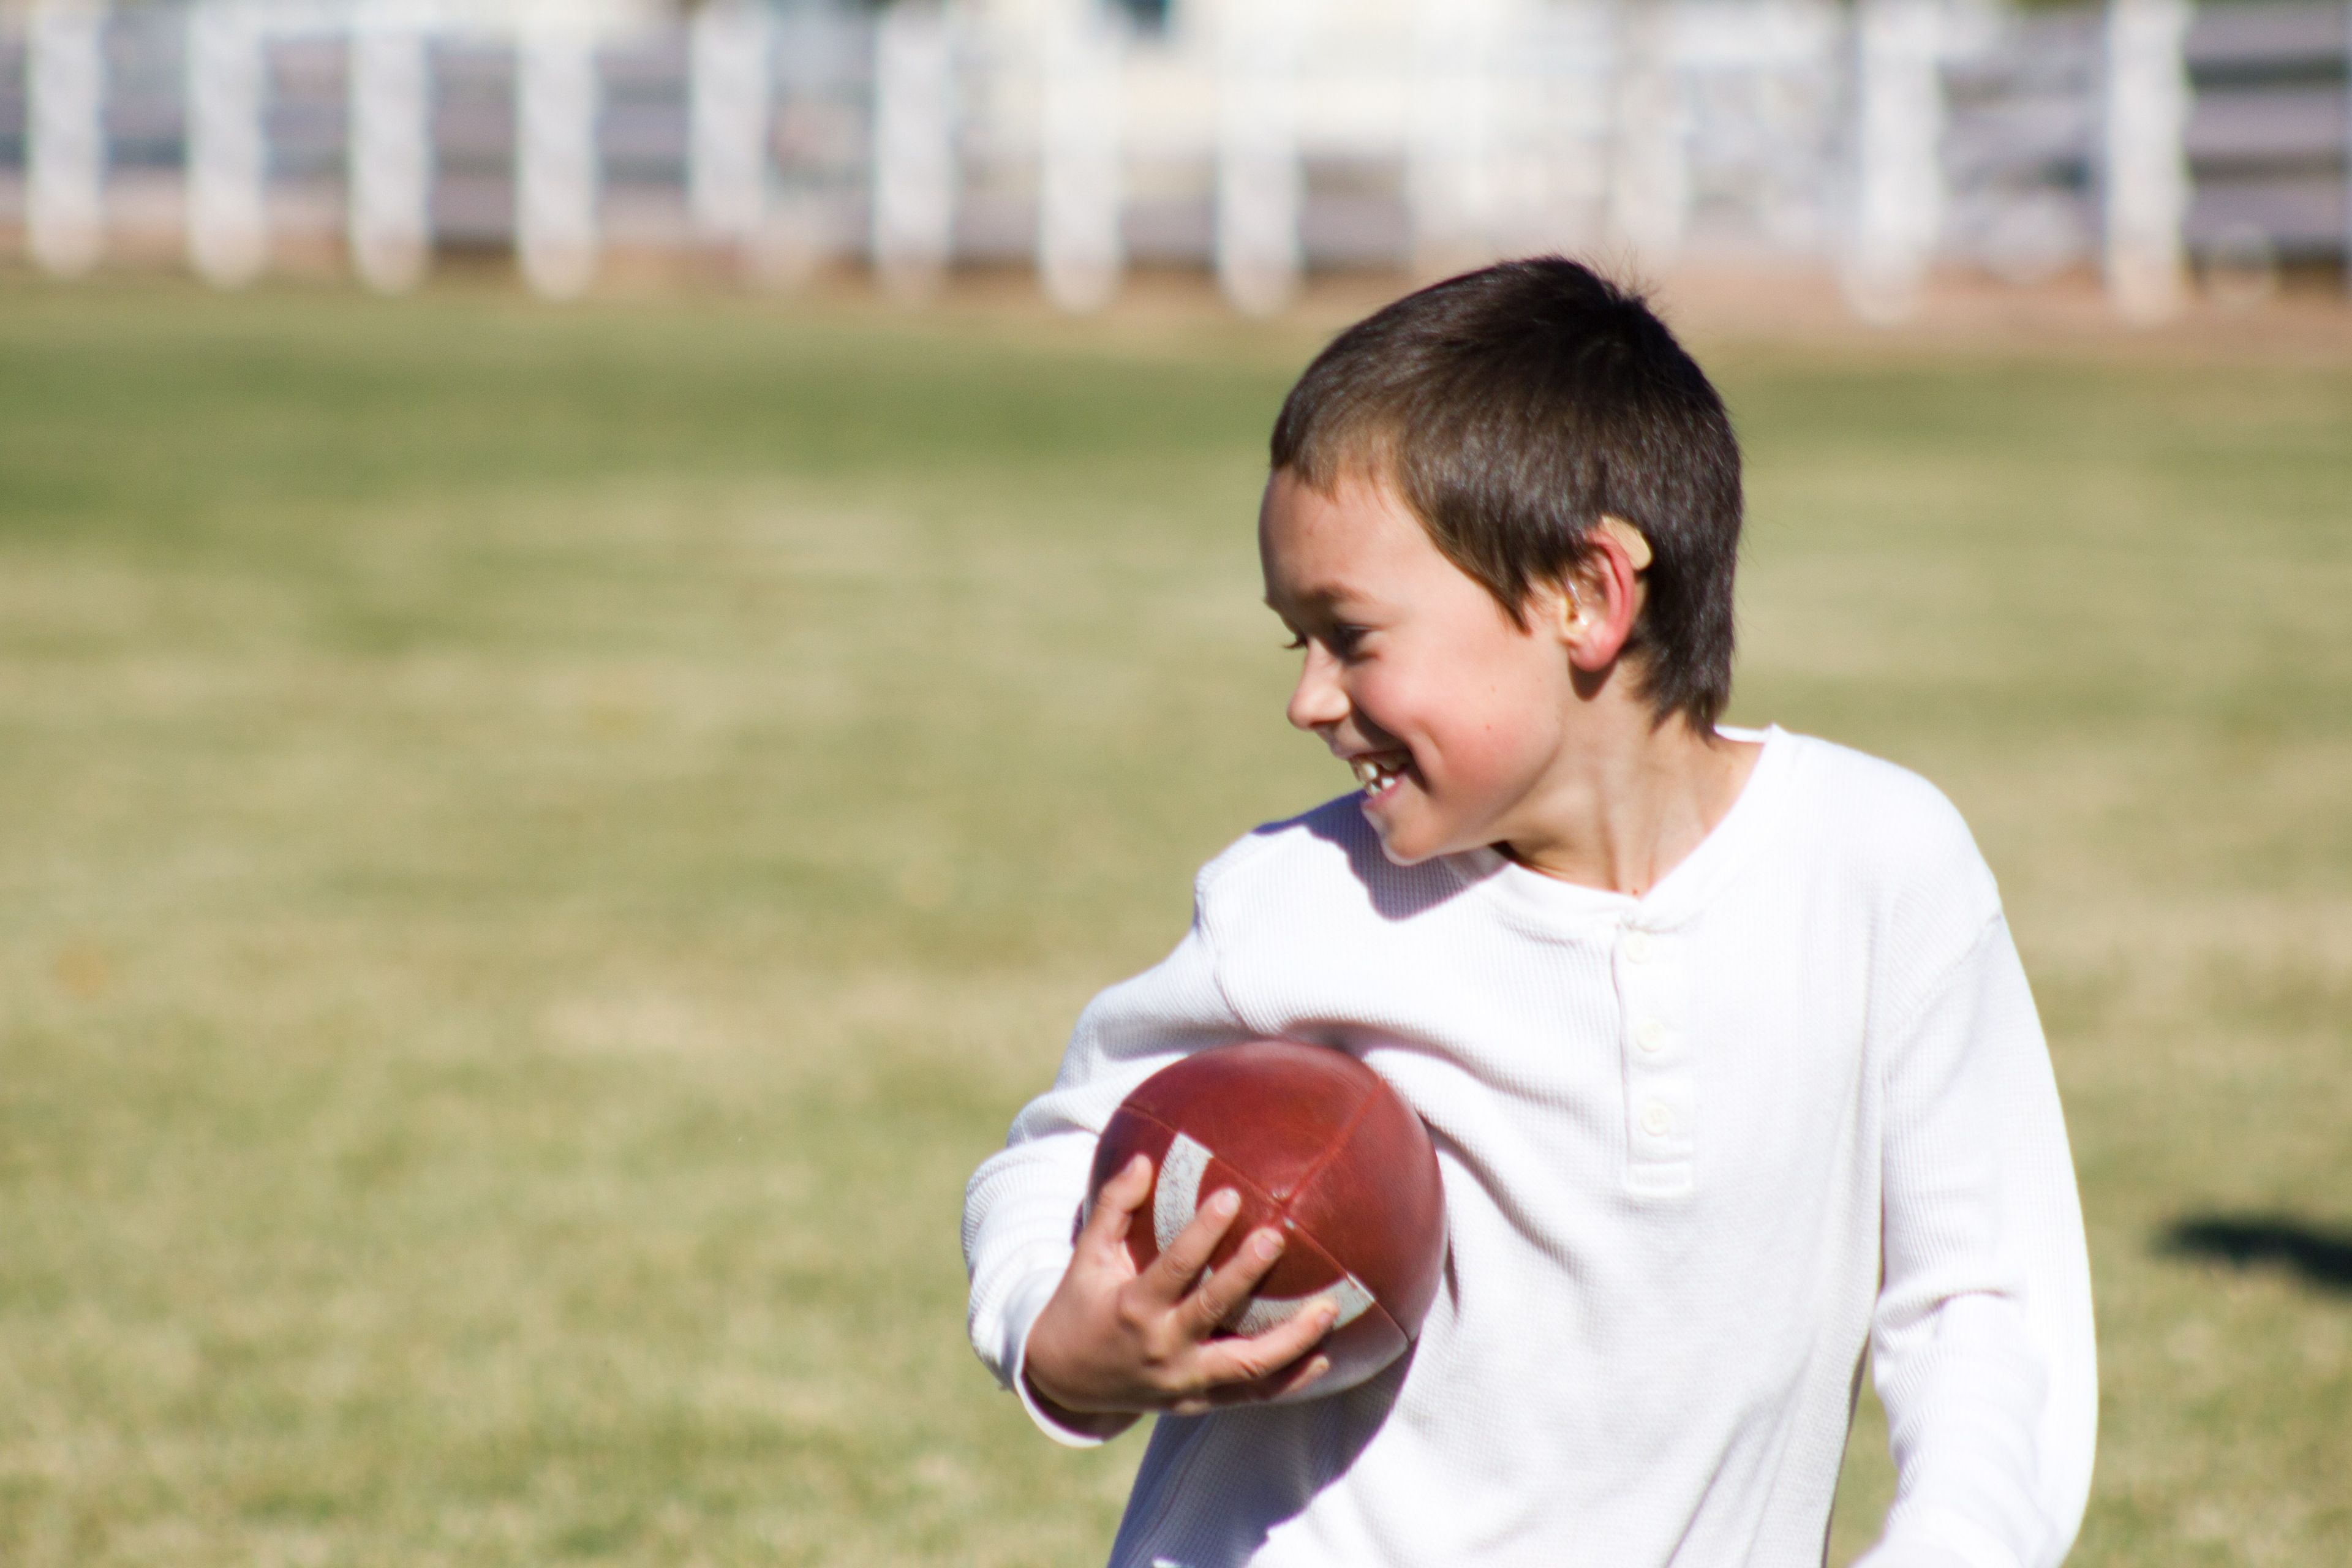 A boy plays with a football.